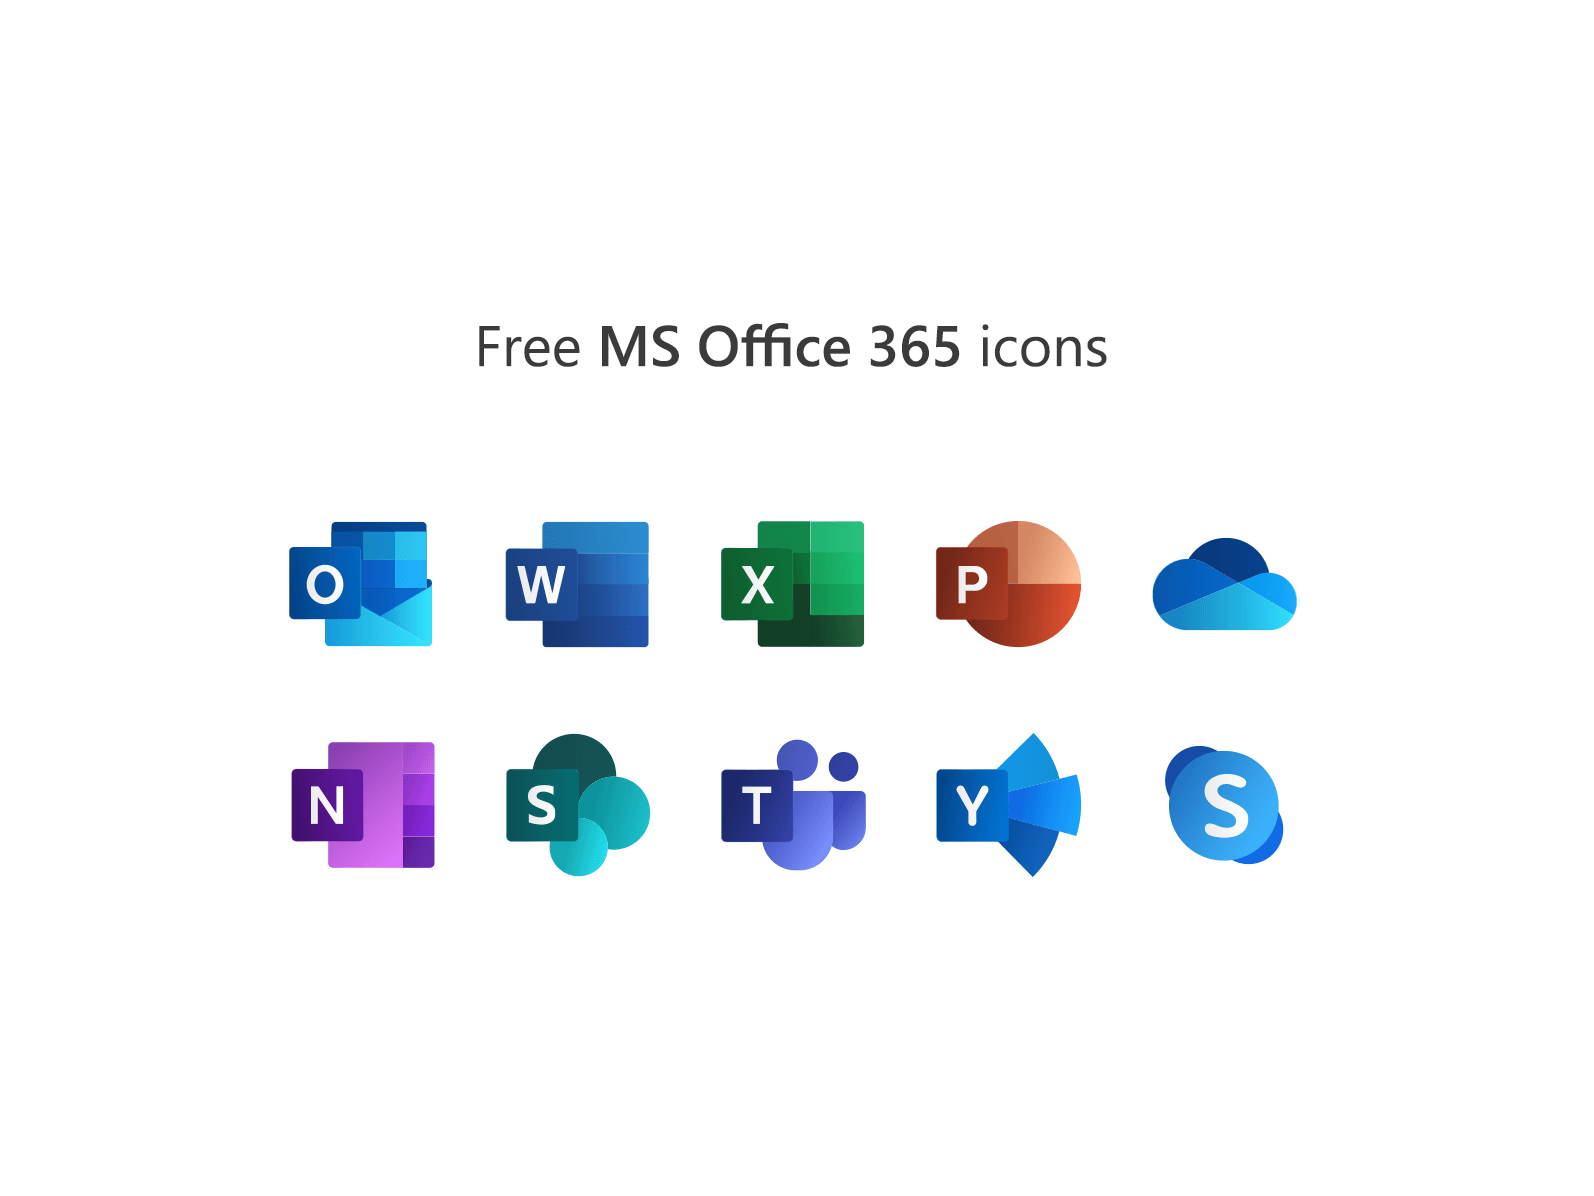 Microsoft Office 365 Application Logo - Free Microsoft Office 365 icons by Mr Boumkil | Dribbble | Dribbble